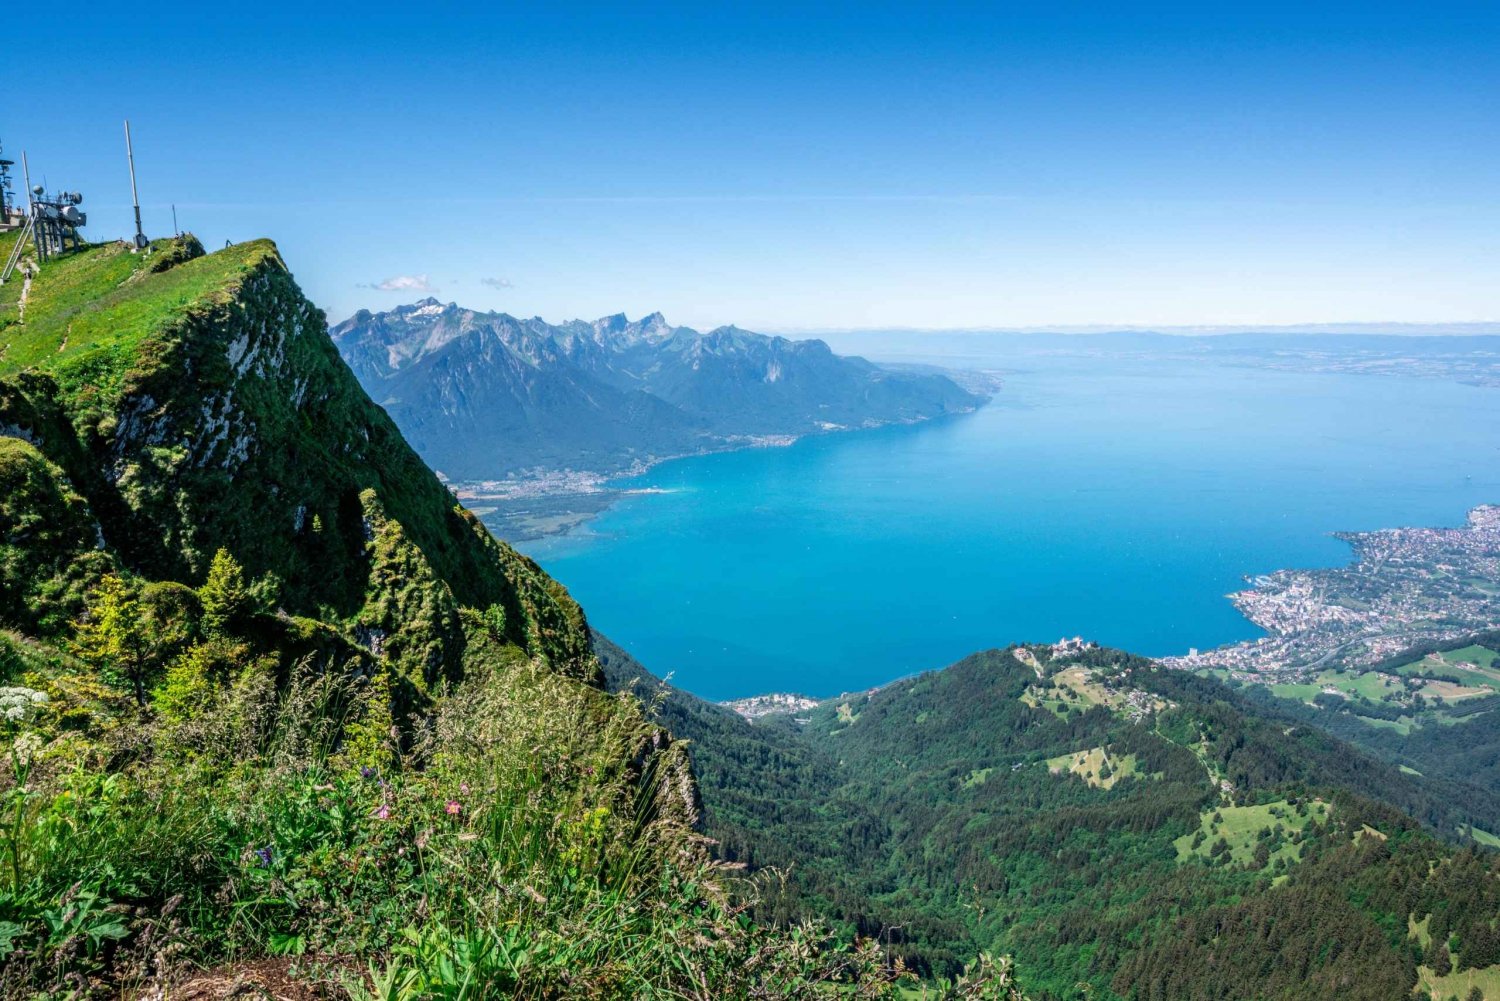 Montreux till Rochers-de-Naye: Biljett till alpint äventyr